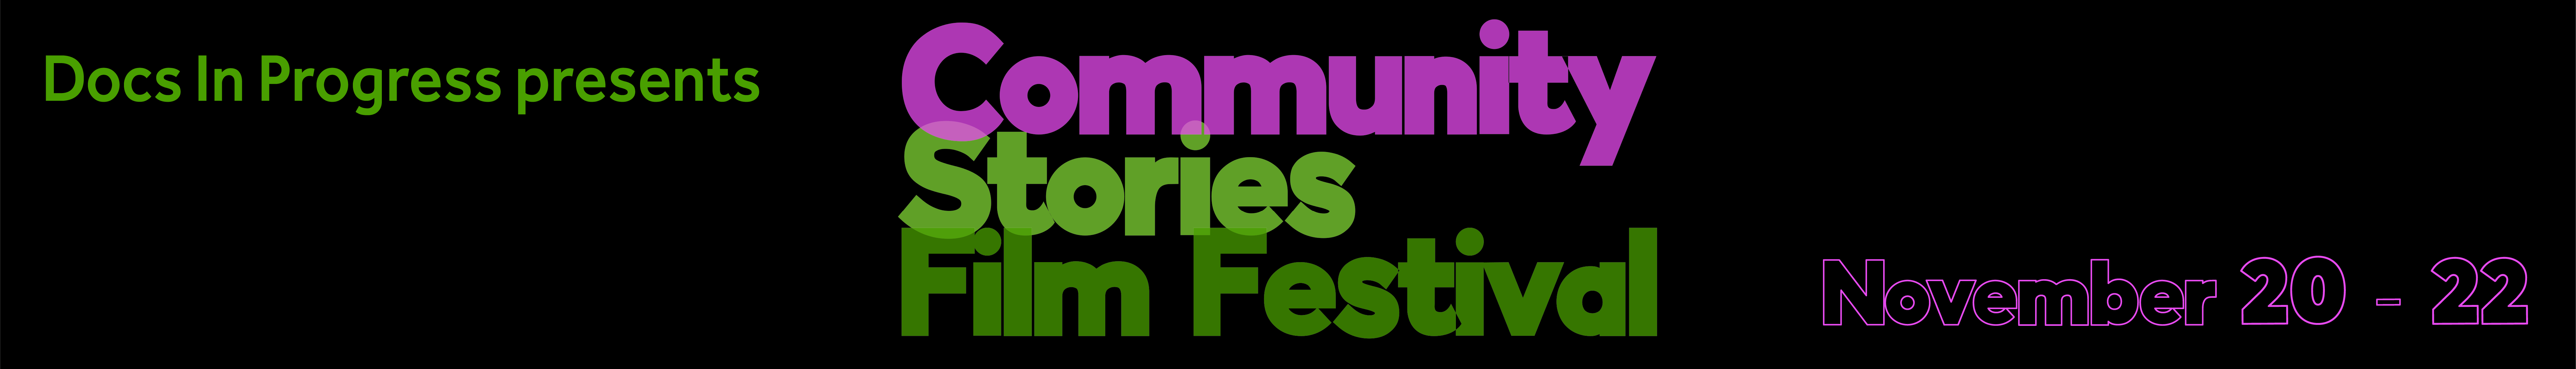 Community Stories Film Festival 2020